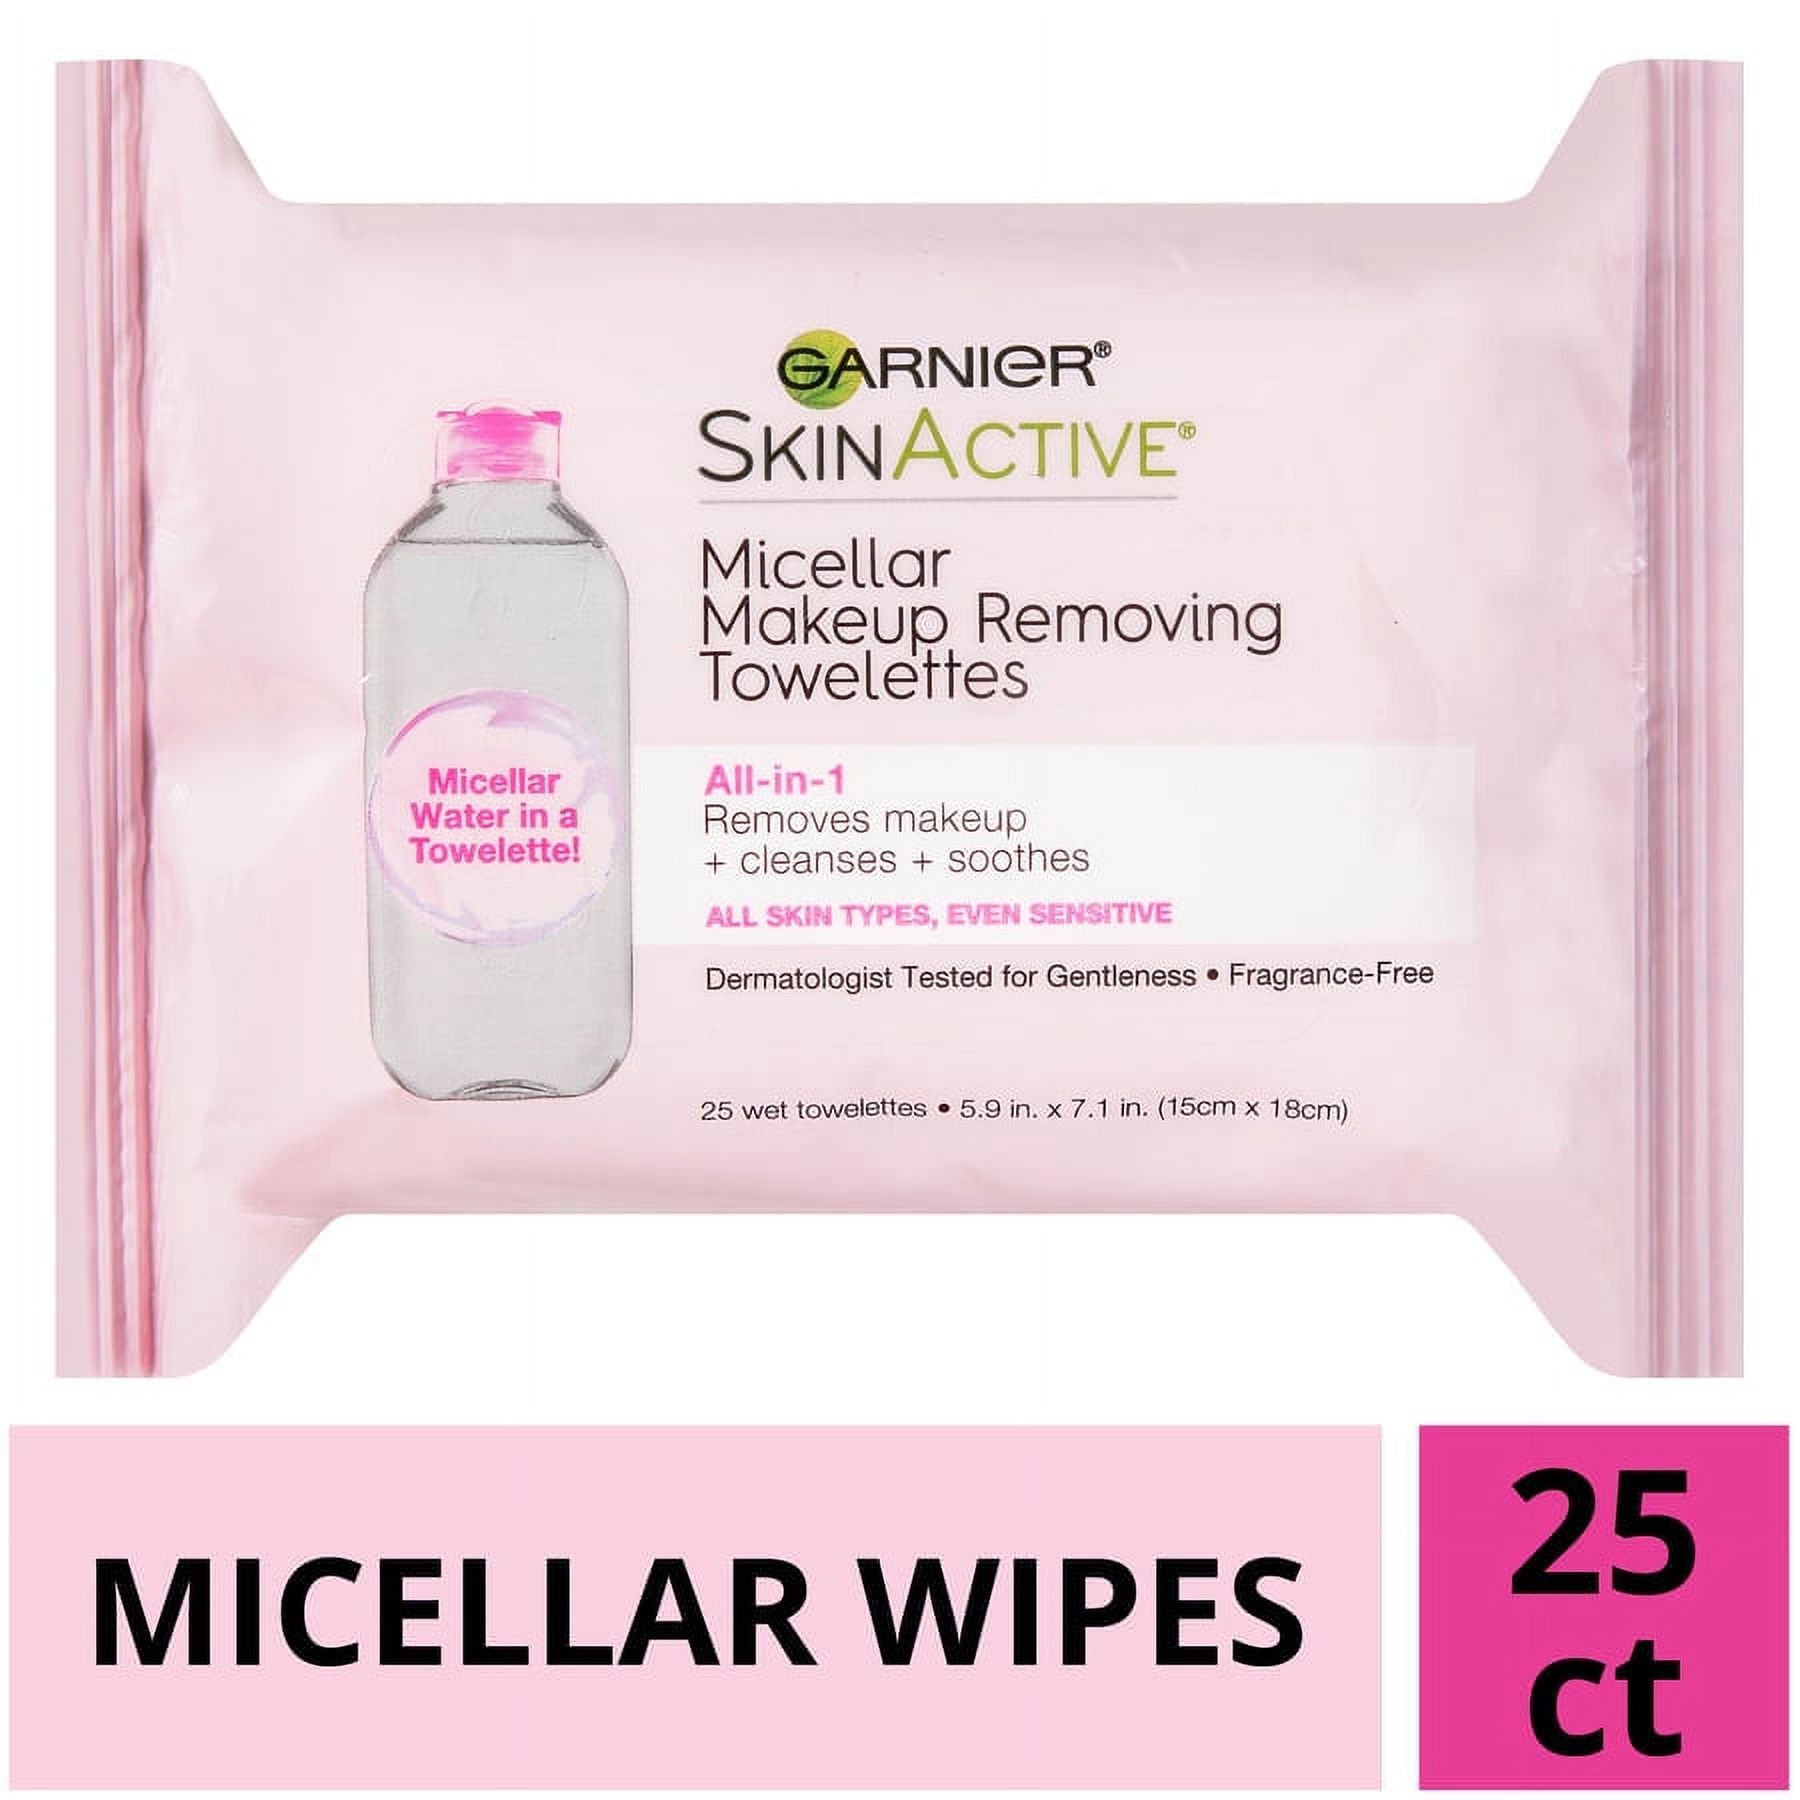 25 ct., Garnier SkinActive Micellar Makeup Remover Wipes - image 5 of 21